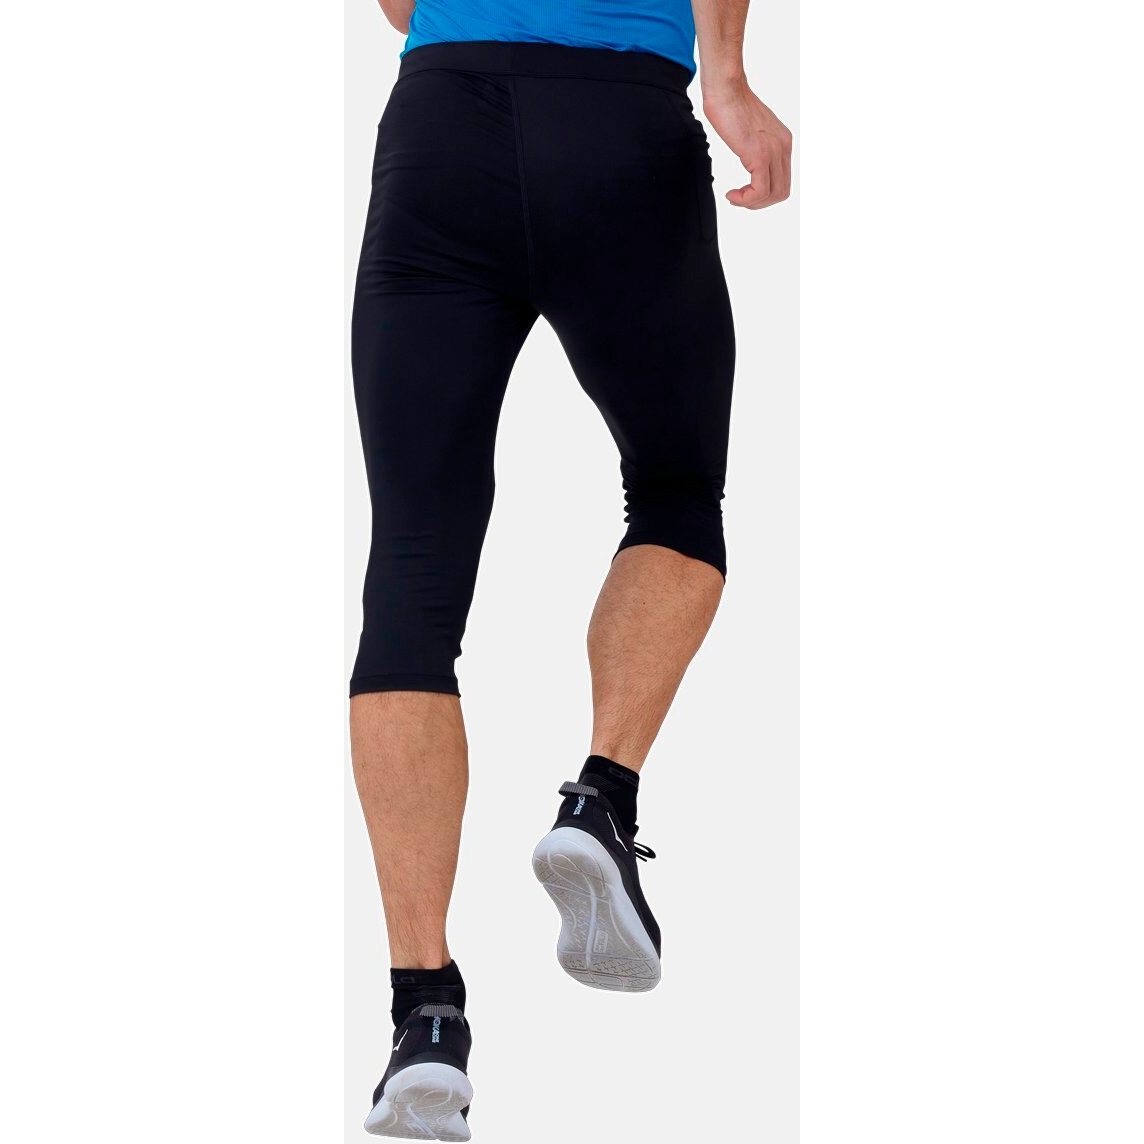 Men's quick-drying running leggings